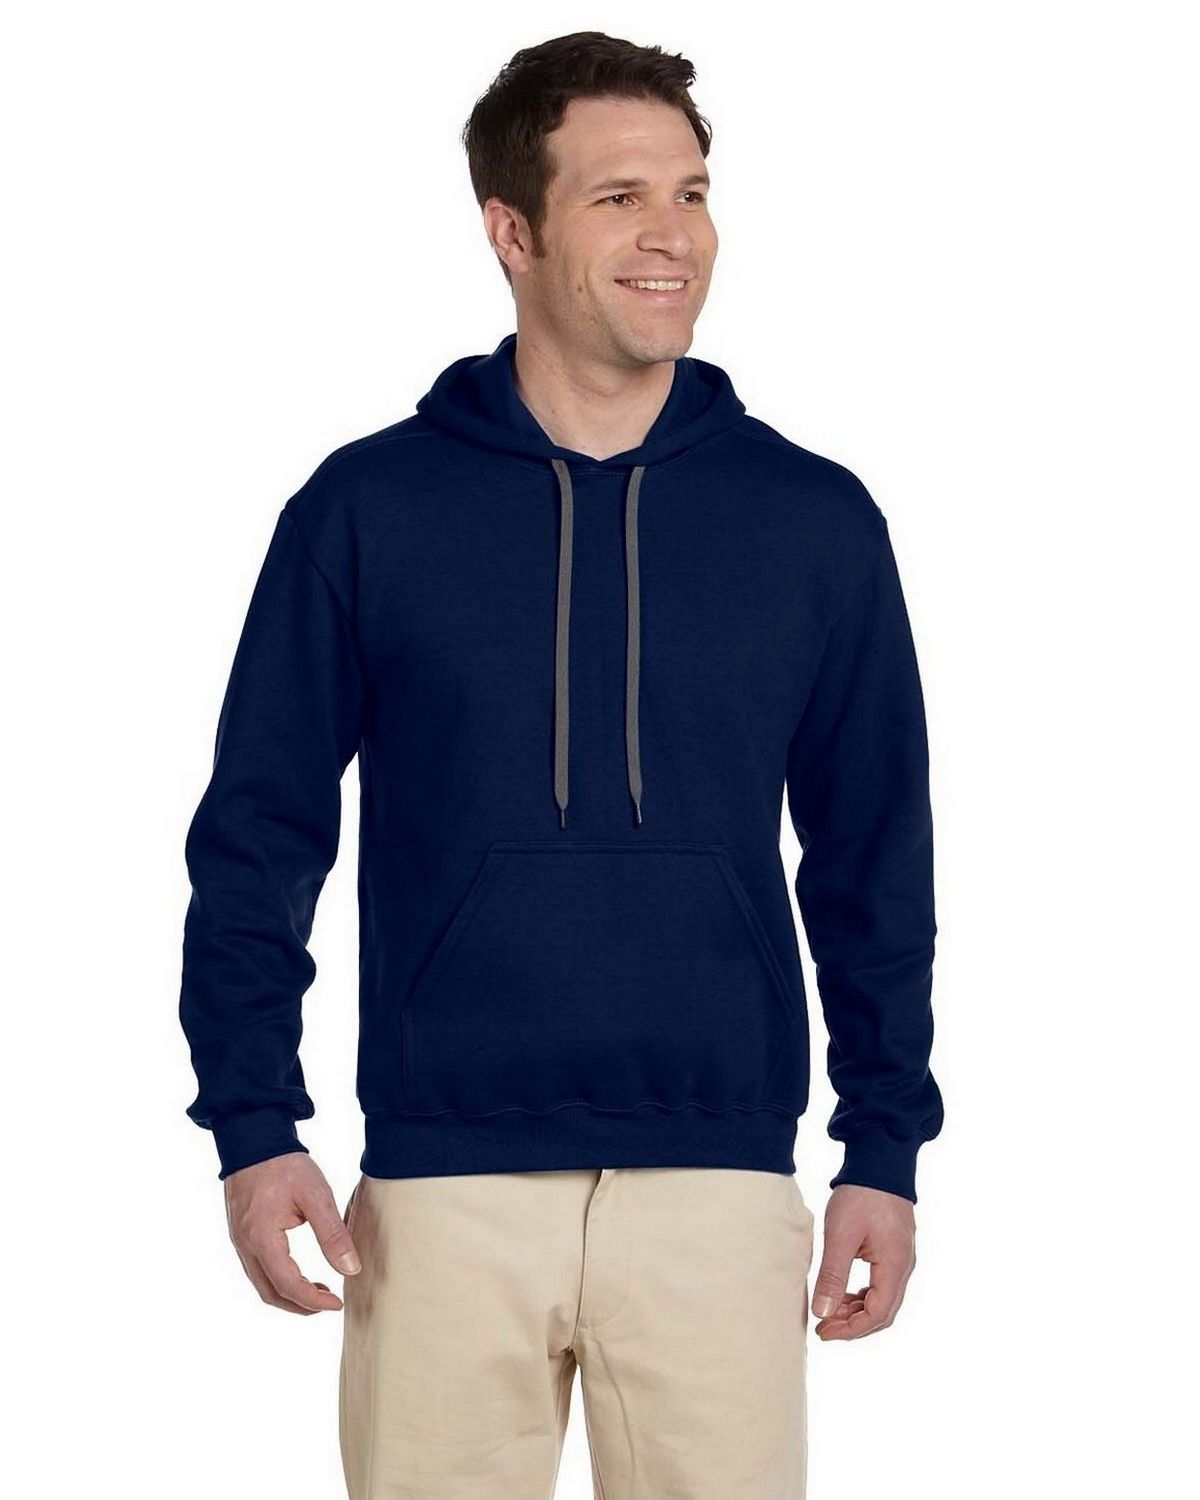 Gildan G925 Premium Cotton Ringspun Hooded Sweatshirt - Navy - S ...